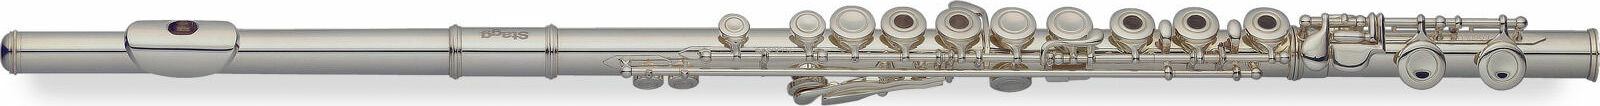 Stagg Ws-fl251s Traversiere En C - Professional flute - Main picture